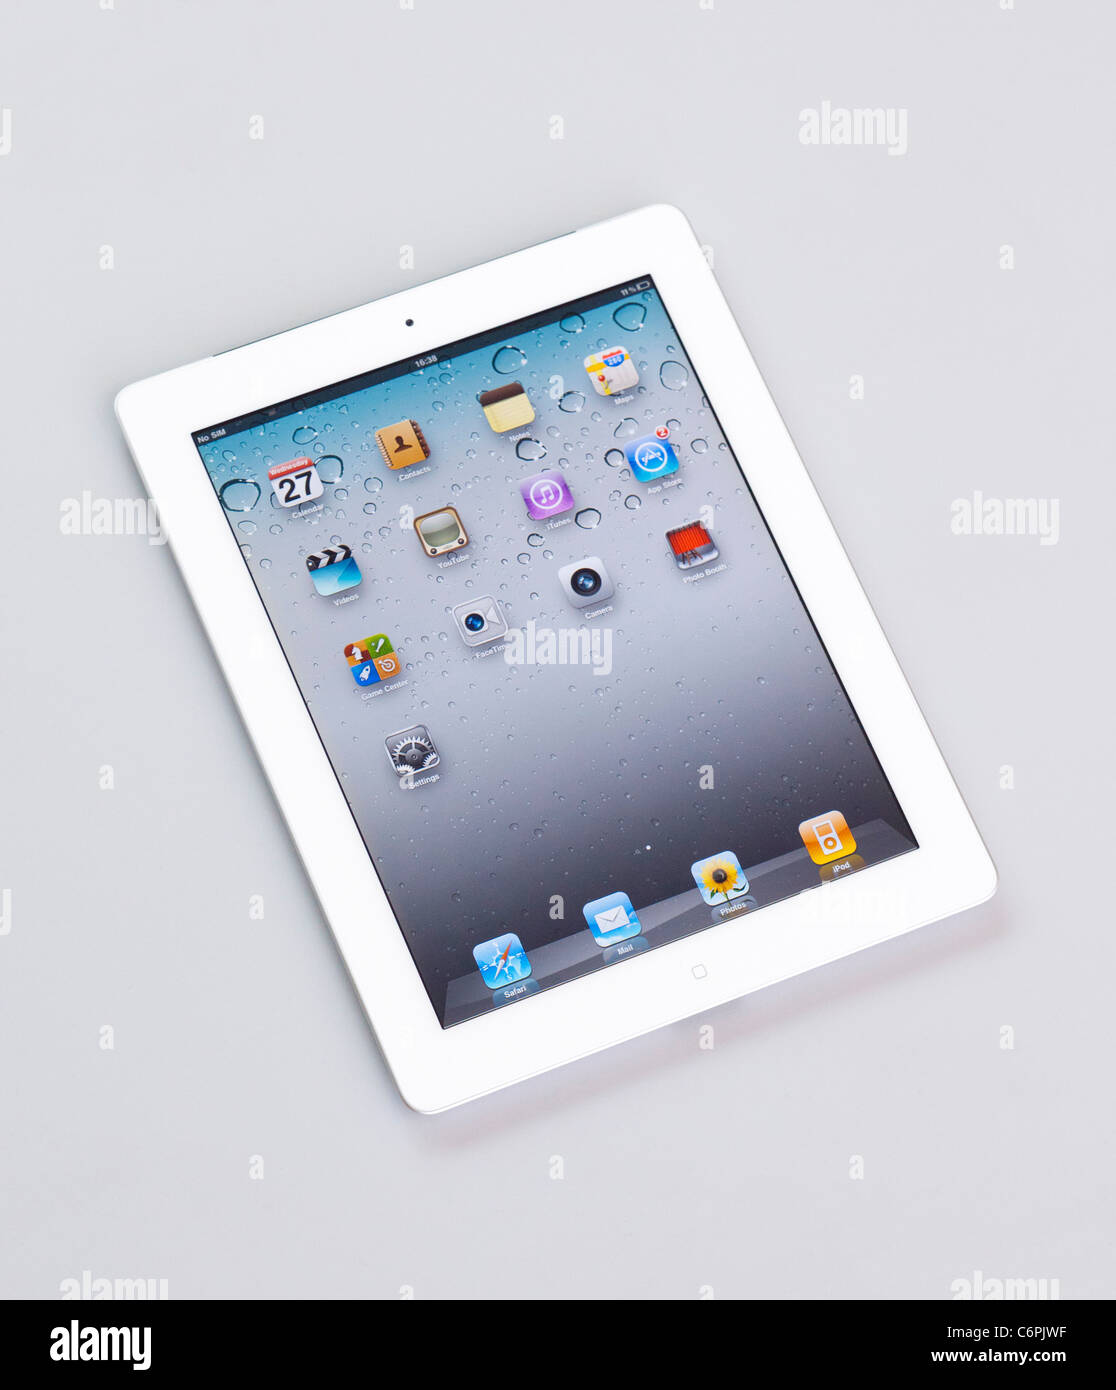 Apple iPad 2 tablet computer Stock Photo